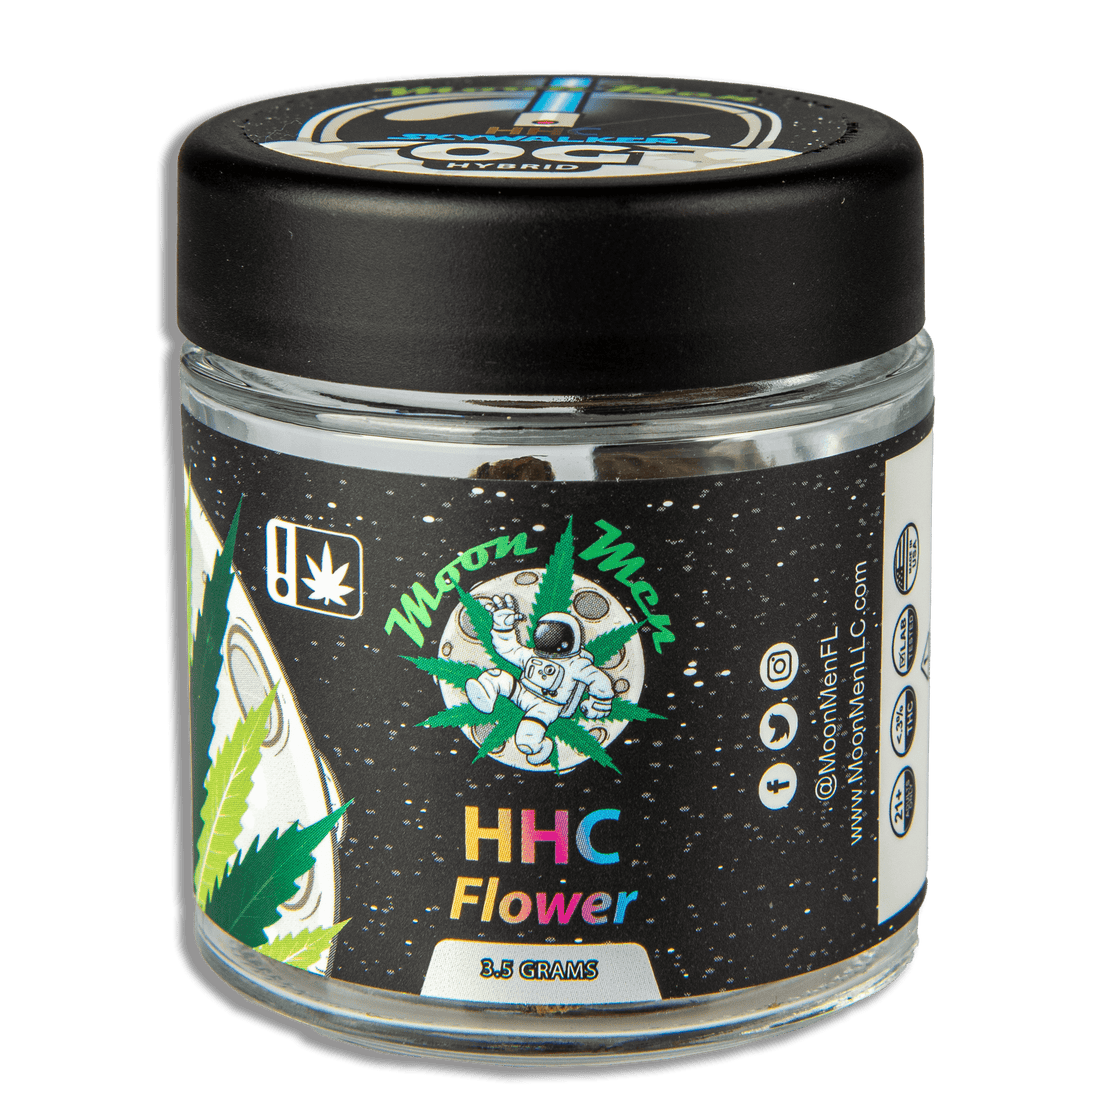 HHC Greenhouse Flower (3.5g) – Skywalker (Hybrid)